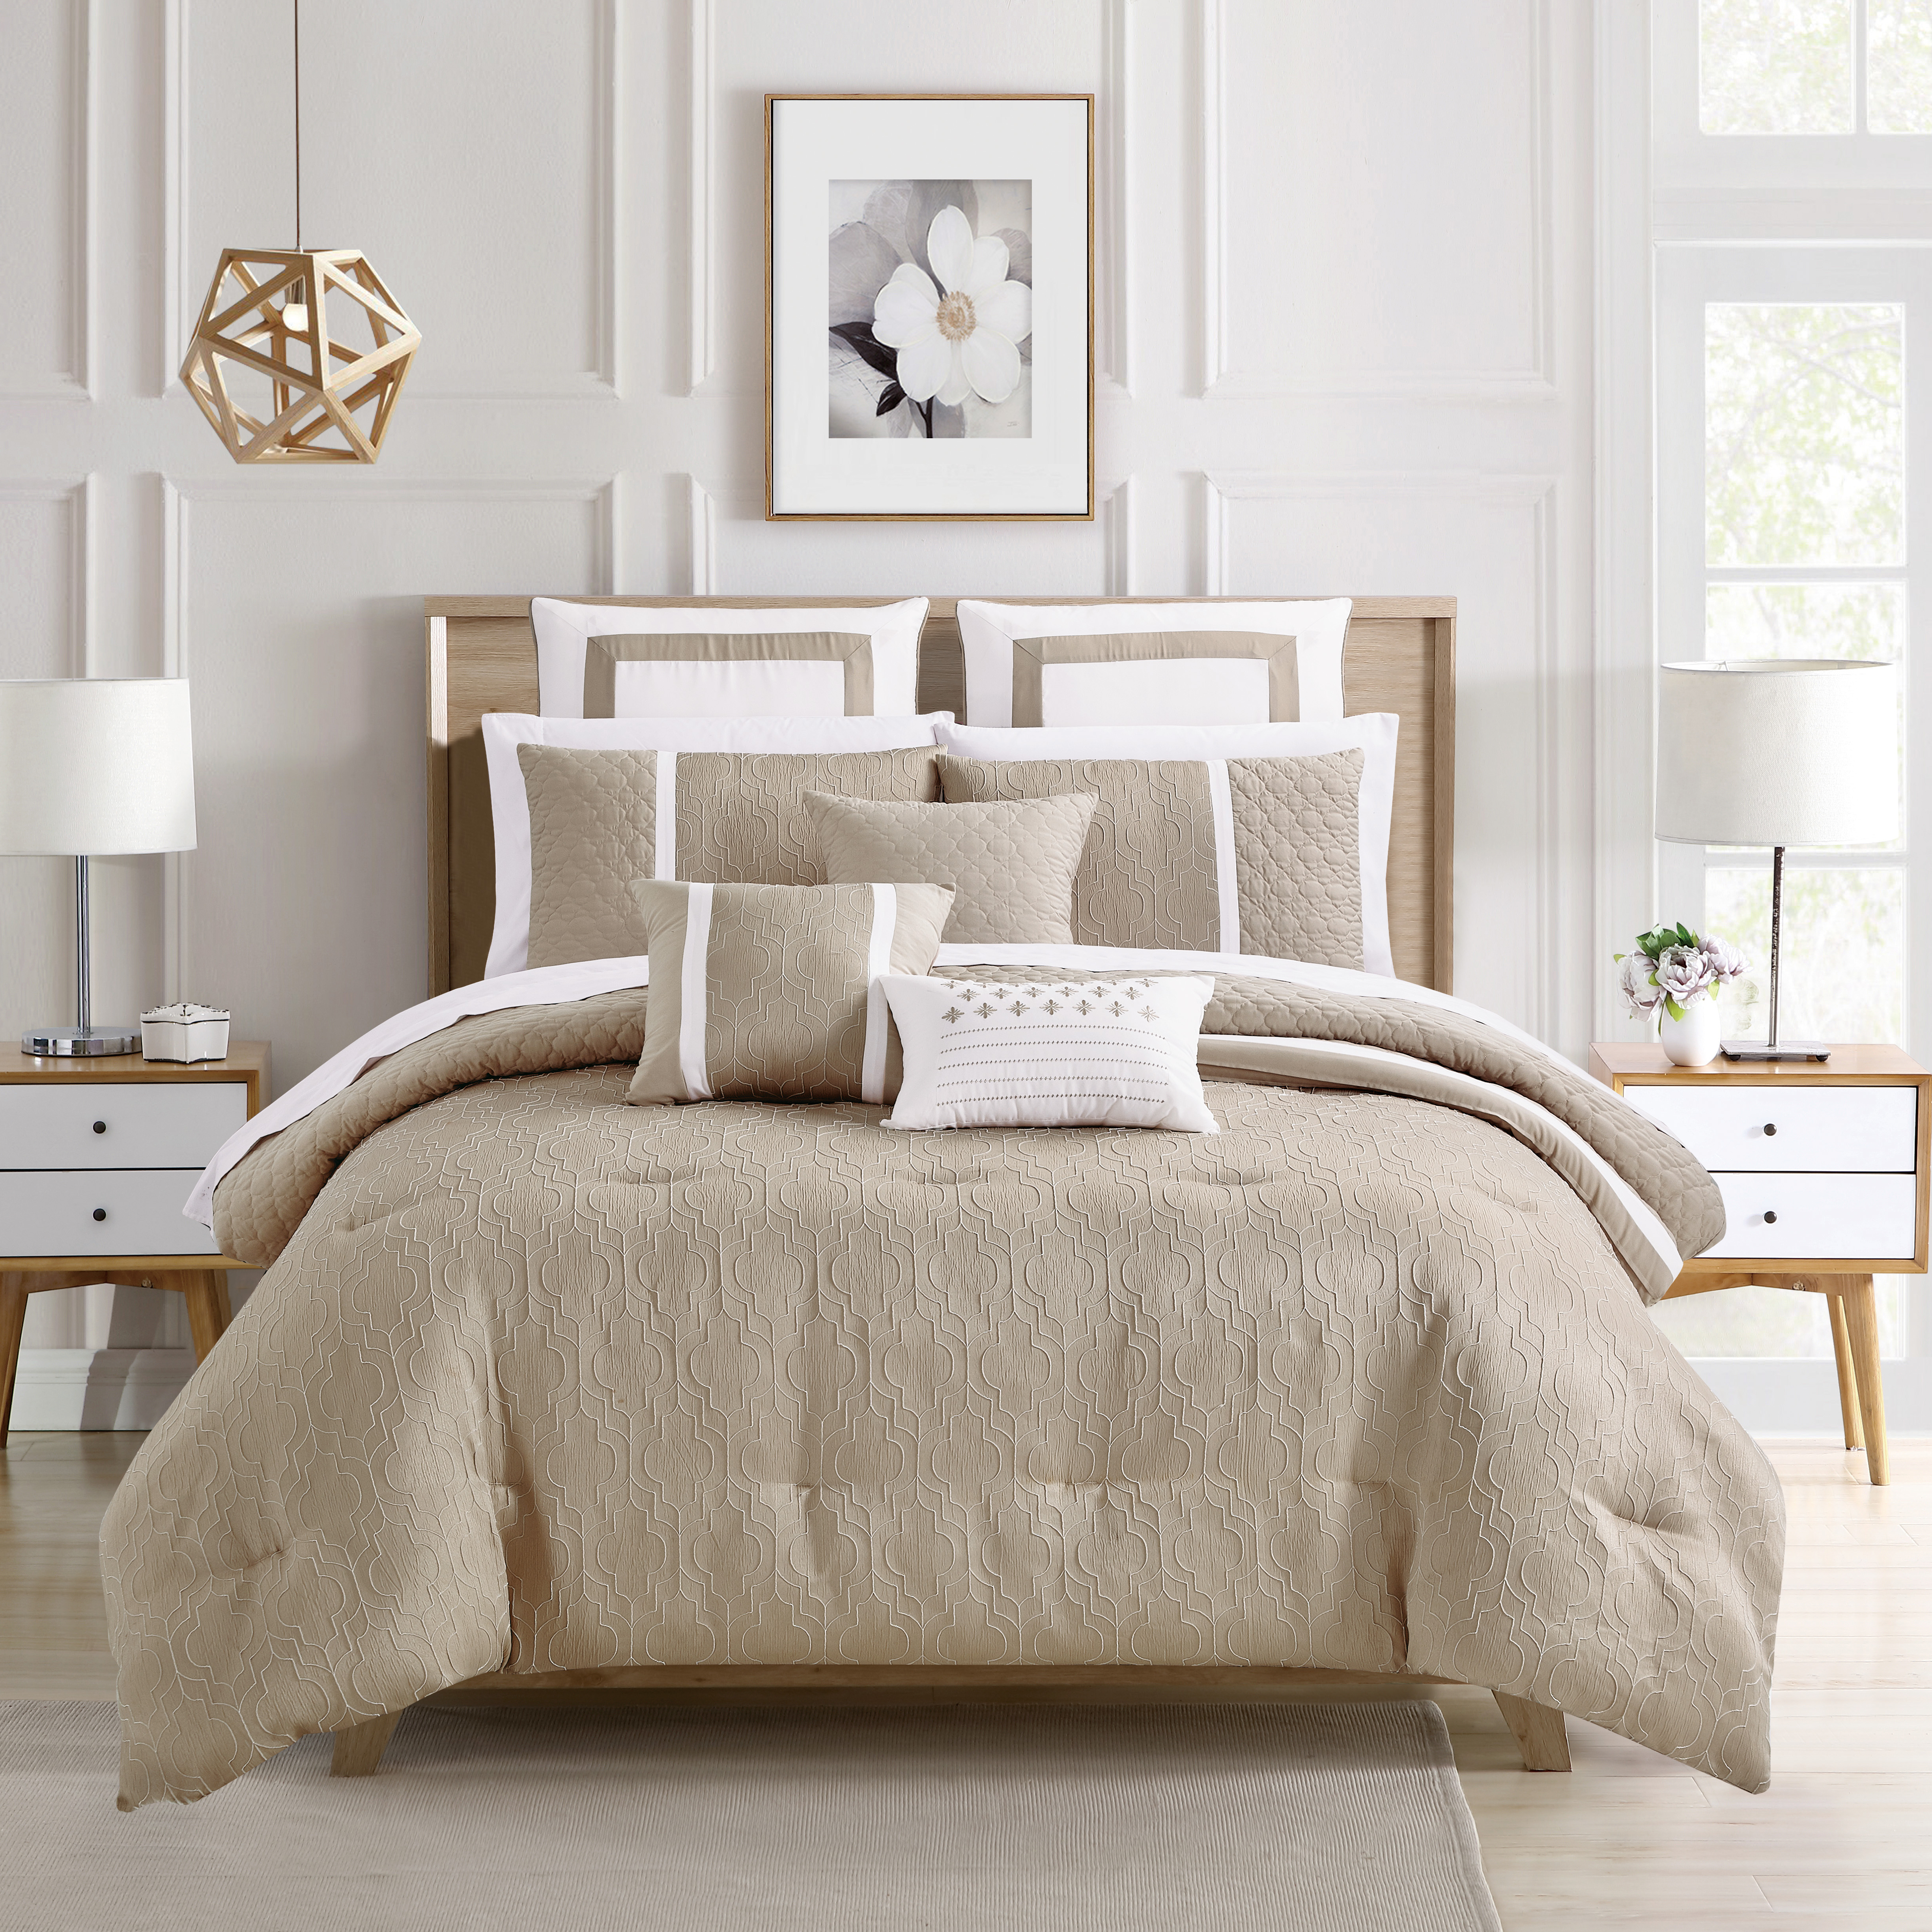 Arlow 8 Piece Comforter Set Jacquard Geometric Quilted Pattern Design Bedding - Teal, King